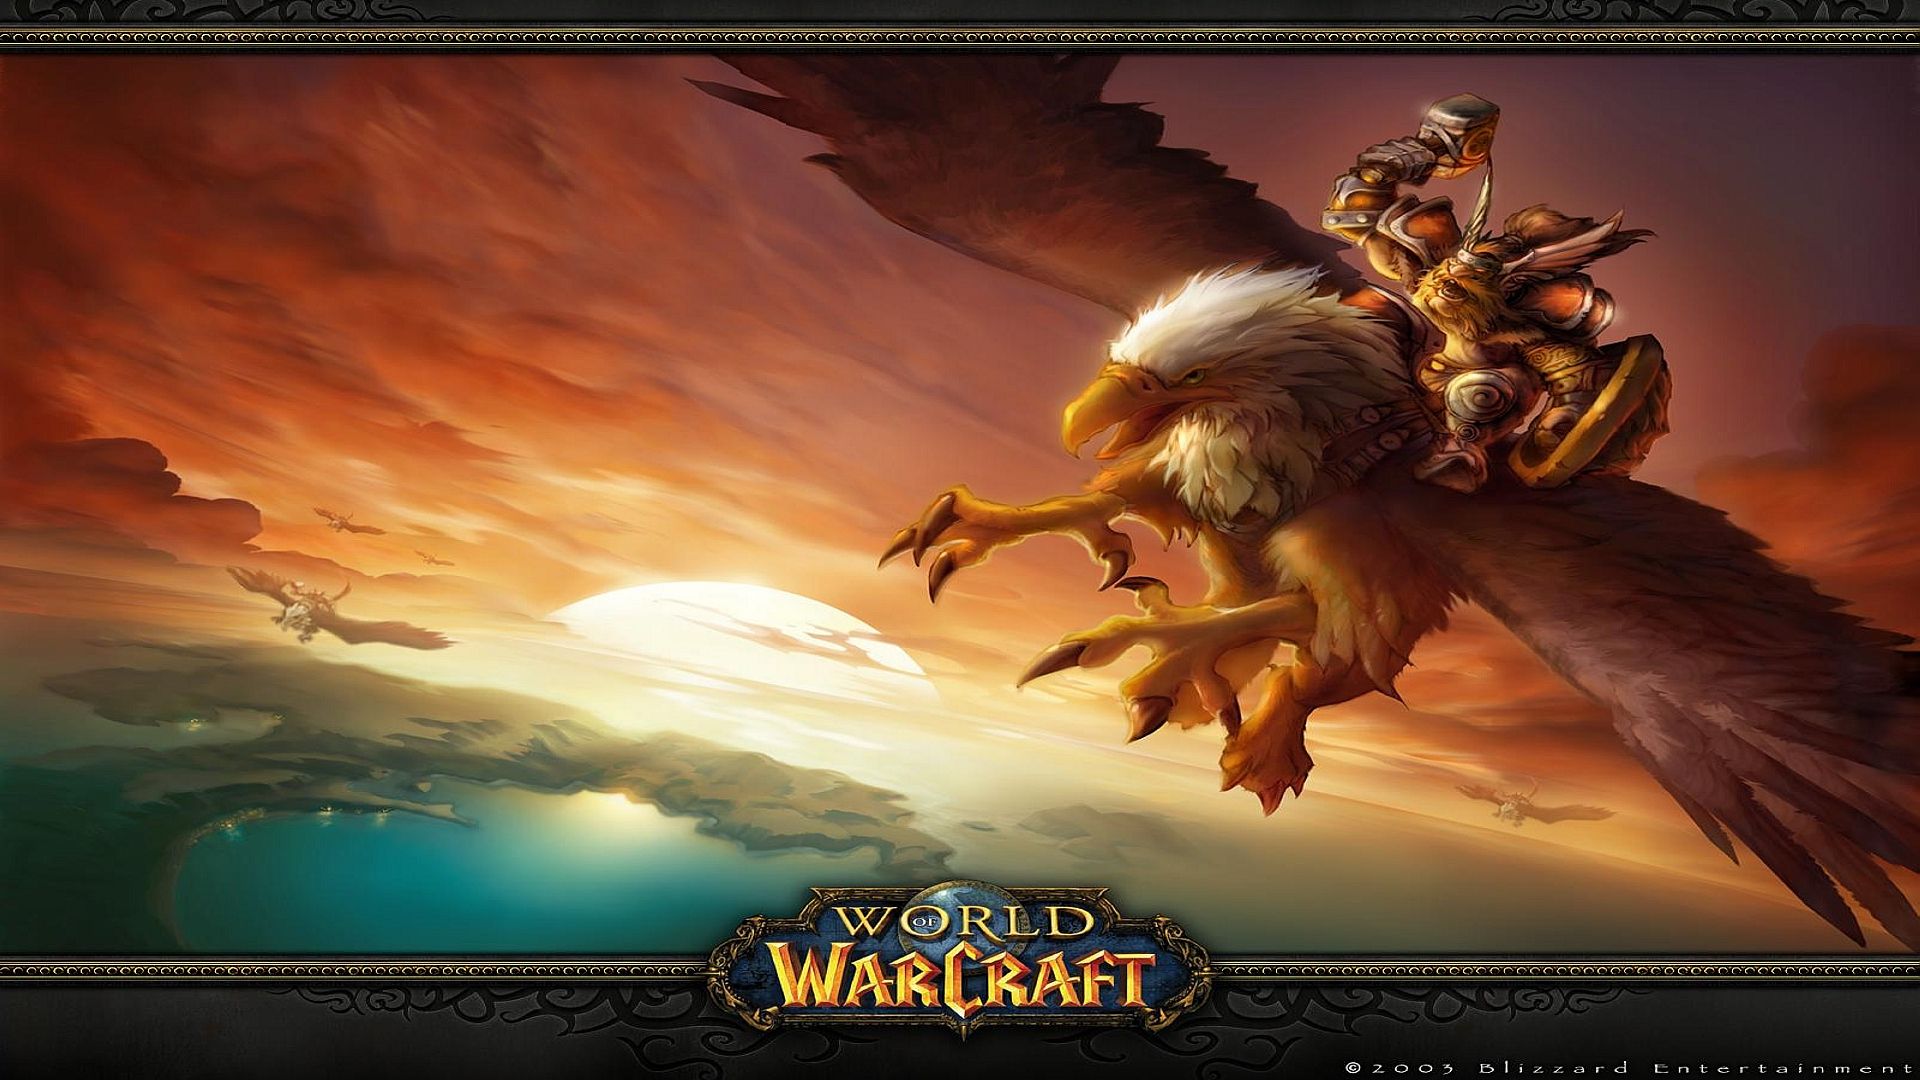  World Of Warcraft Hintergrundbild 1920x1080. of Warcraft 4K wallpaper for your desktop or mobile screen